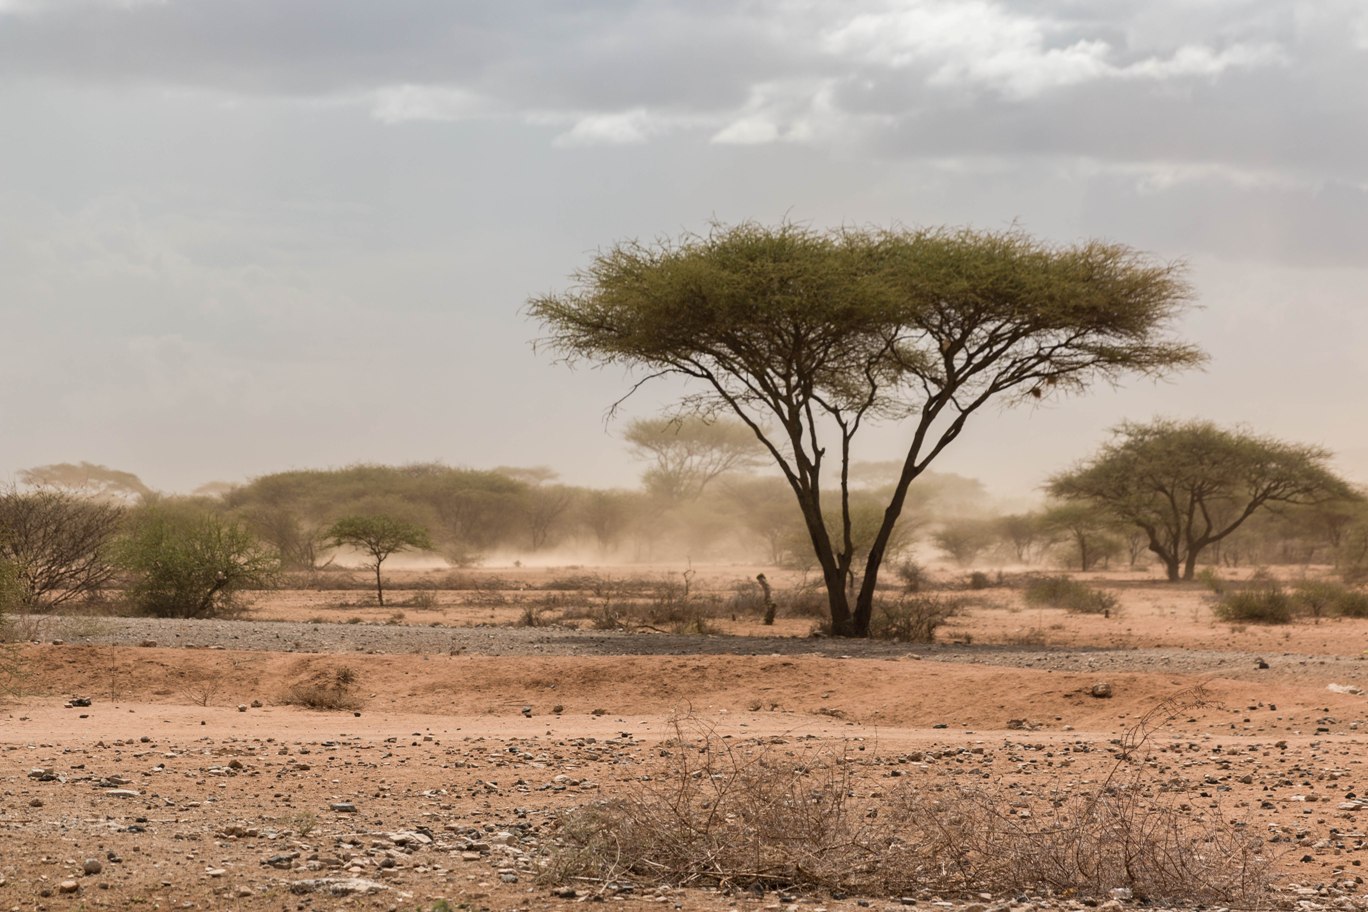 Sand storm in northern tanzania near the border with Kenya in Namnaga Arusha road.